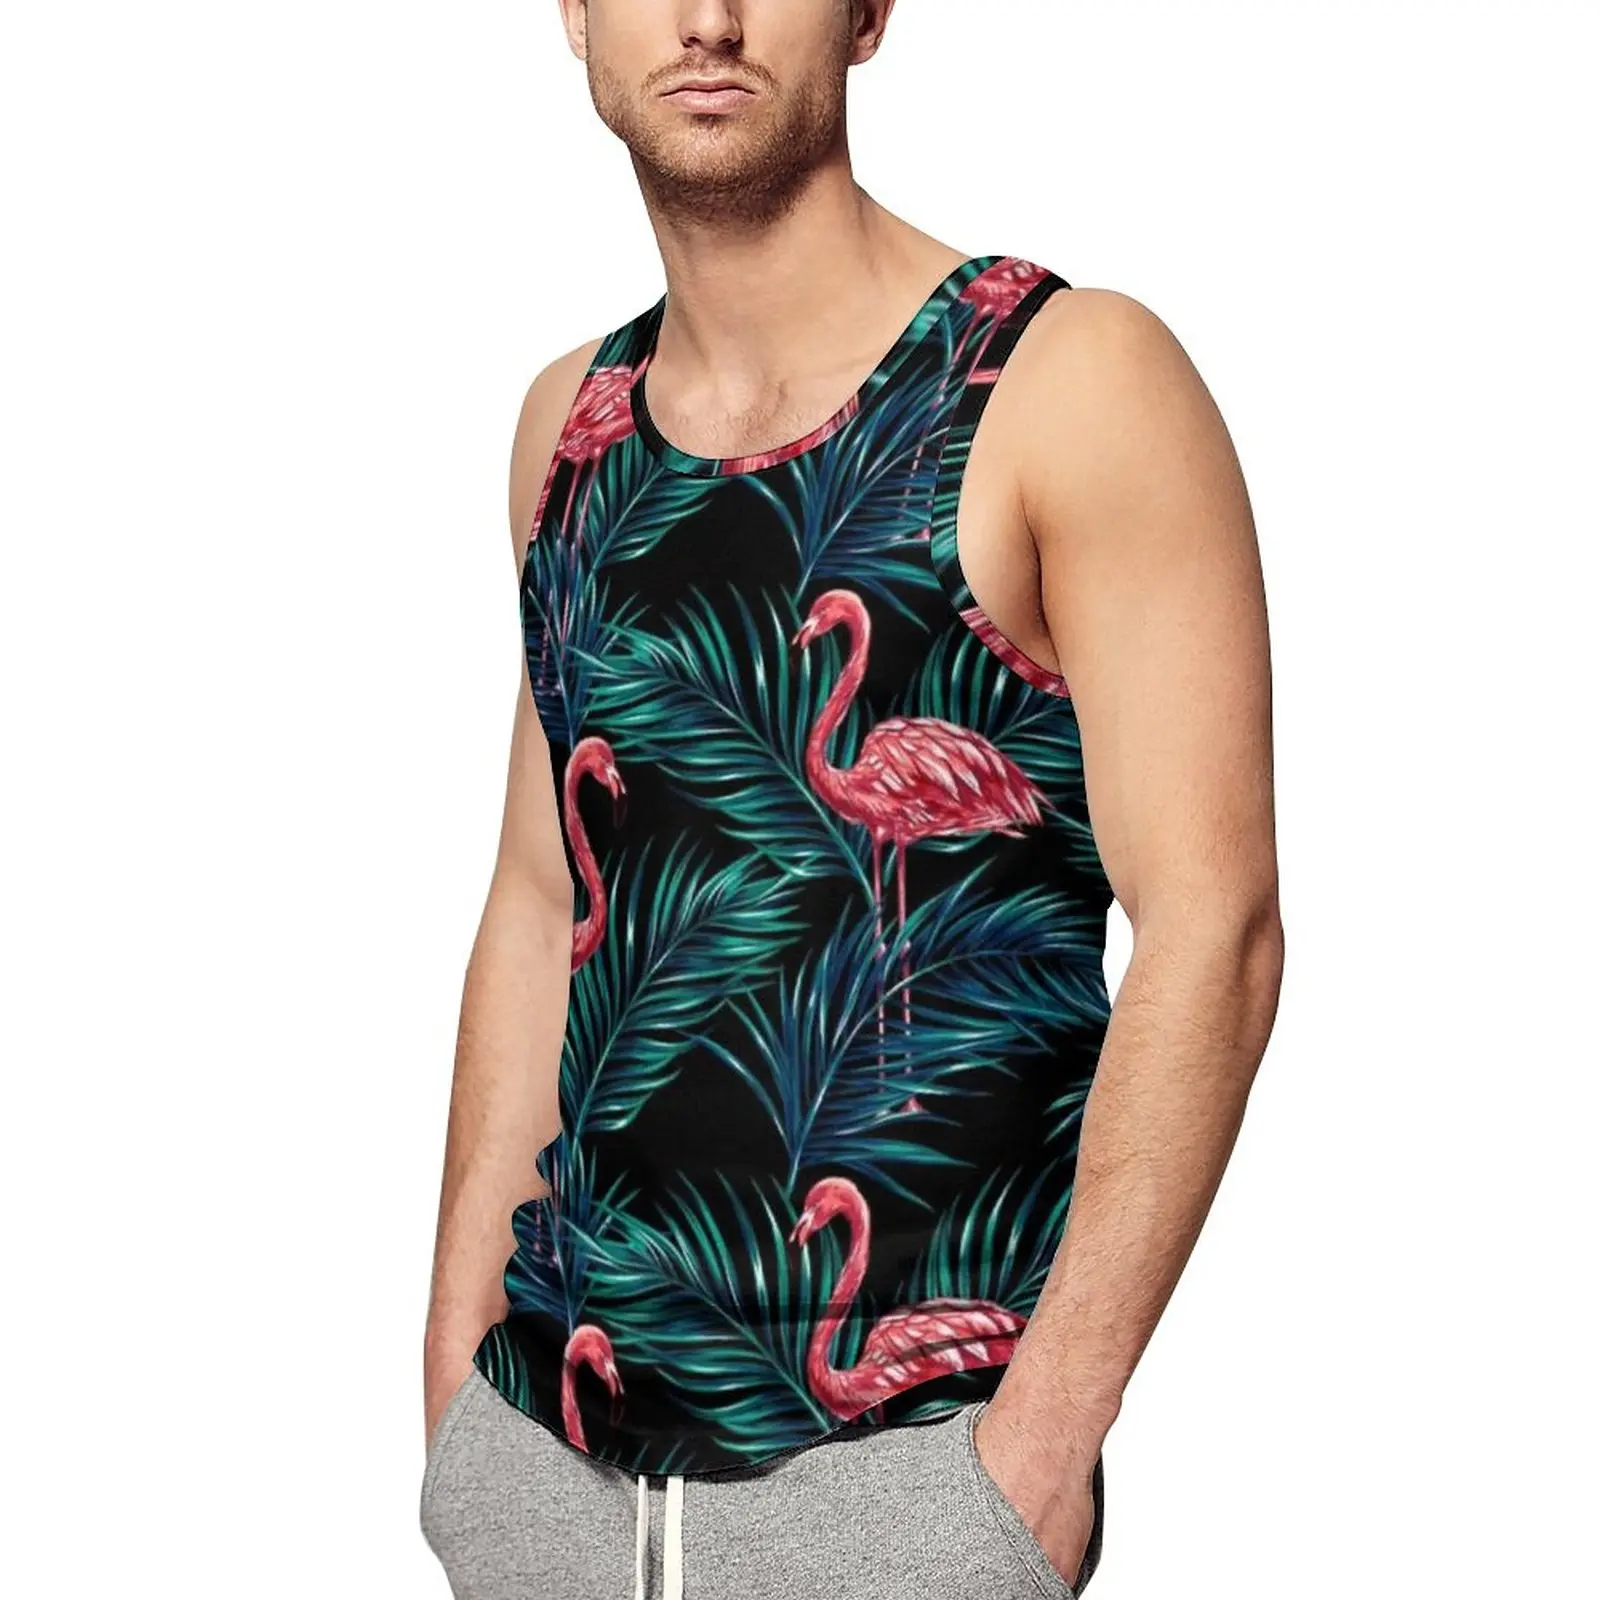 

Tropical Flamingo Birds Tank Top Green Leaves Print Sportswear Tops Beach Bodybuilding Males Sleeveless Shirts Big Size 4XL 5XL